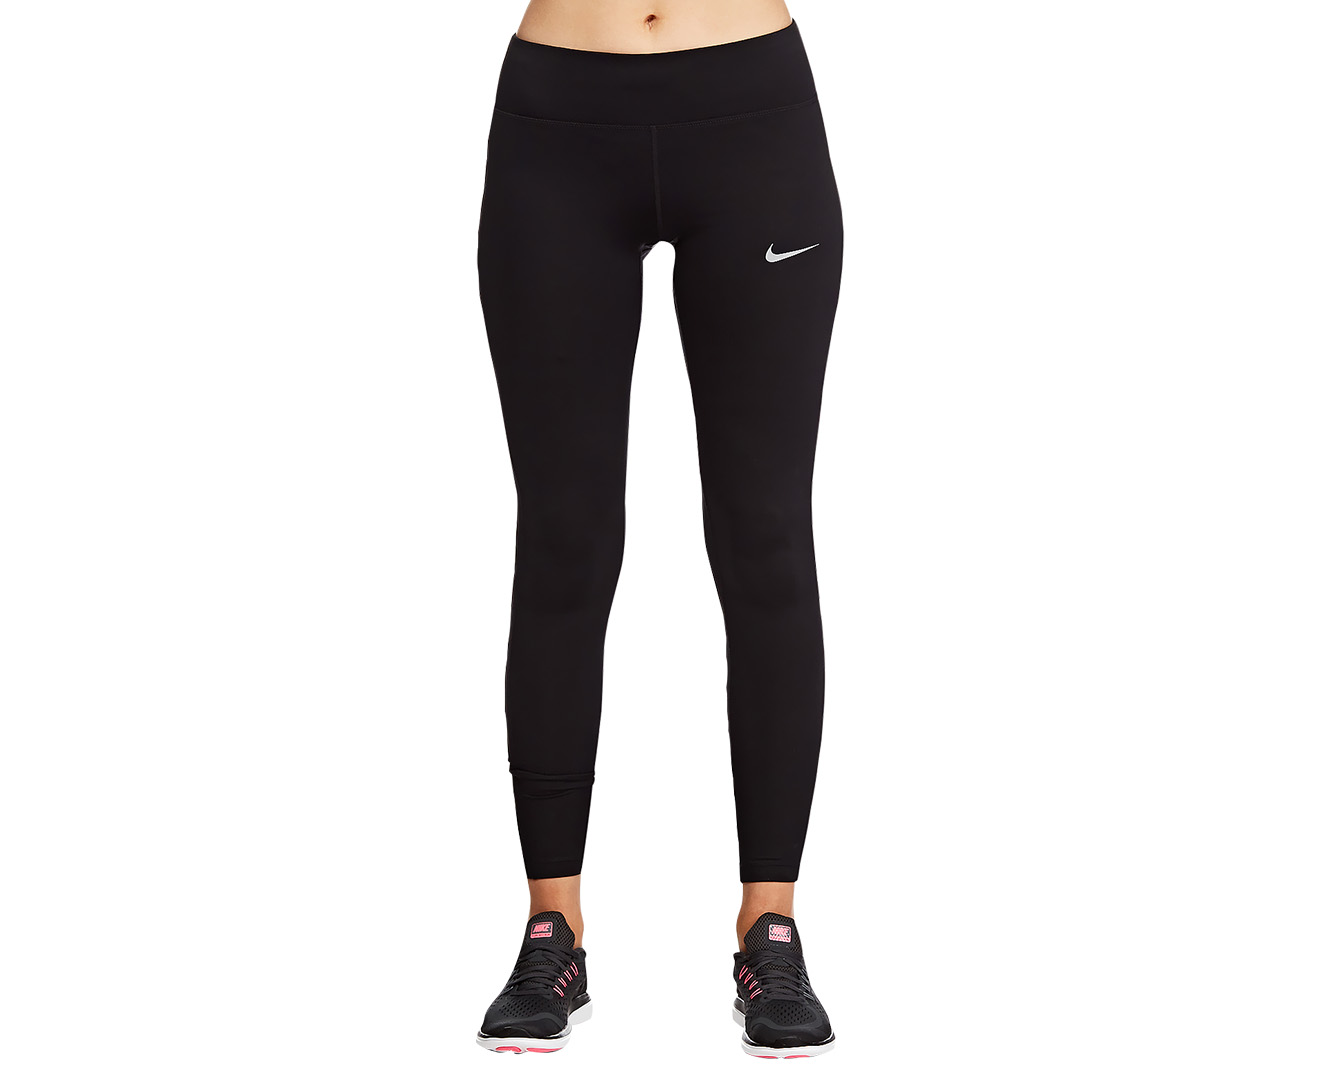 Nike Women's Power Essential Tight - Black/Reflective Silver | Catch.com.au